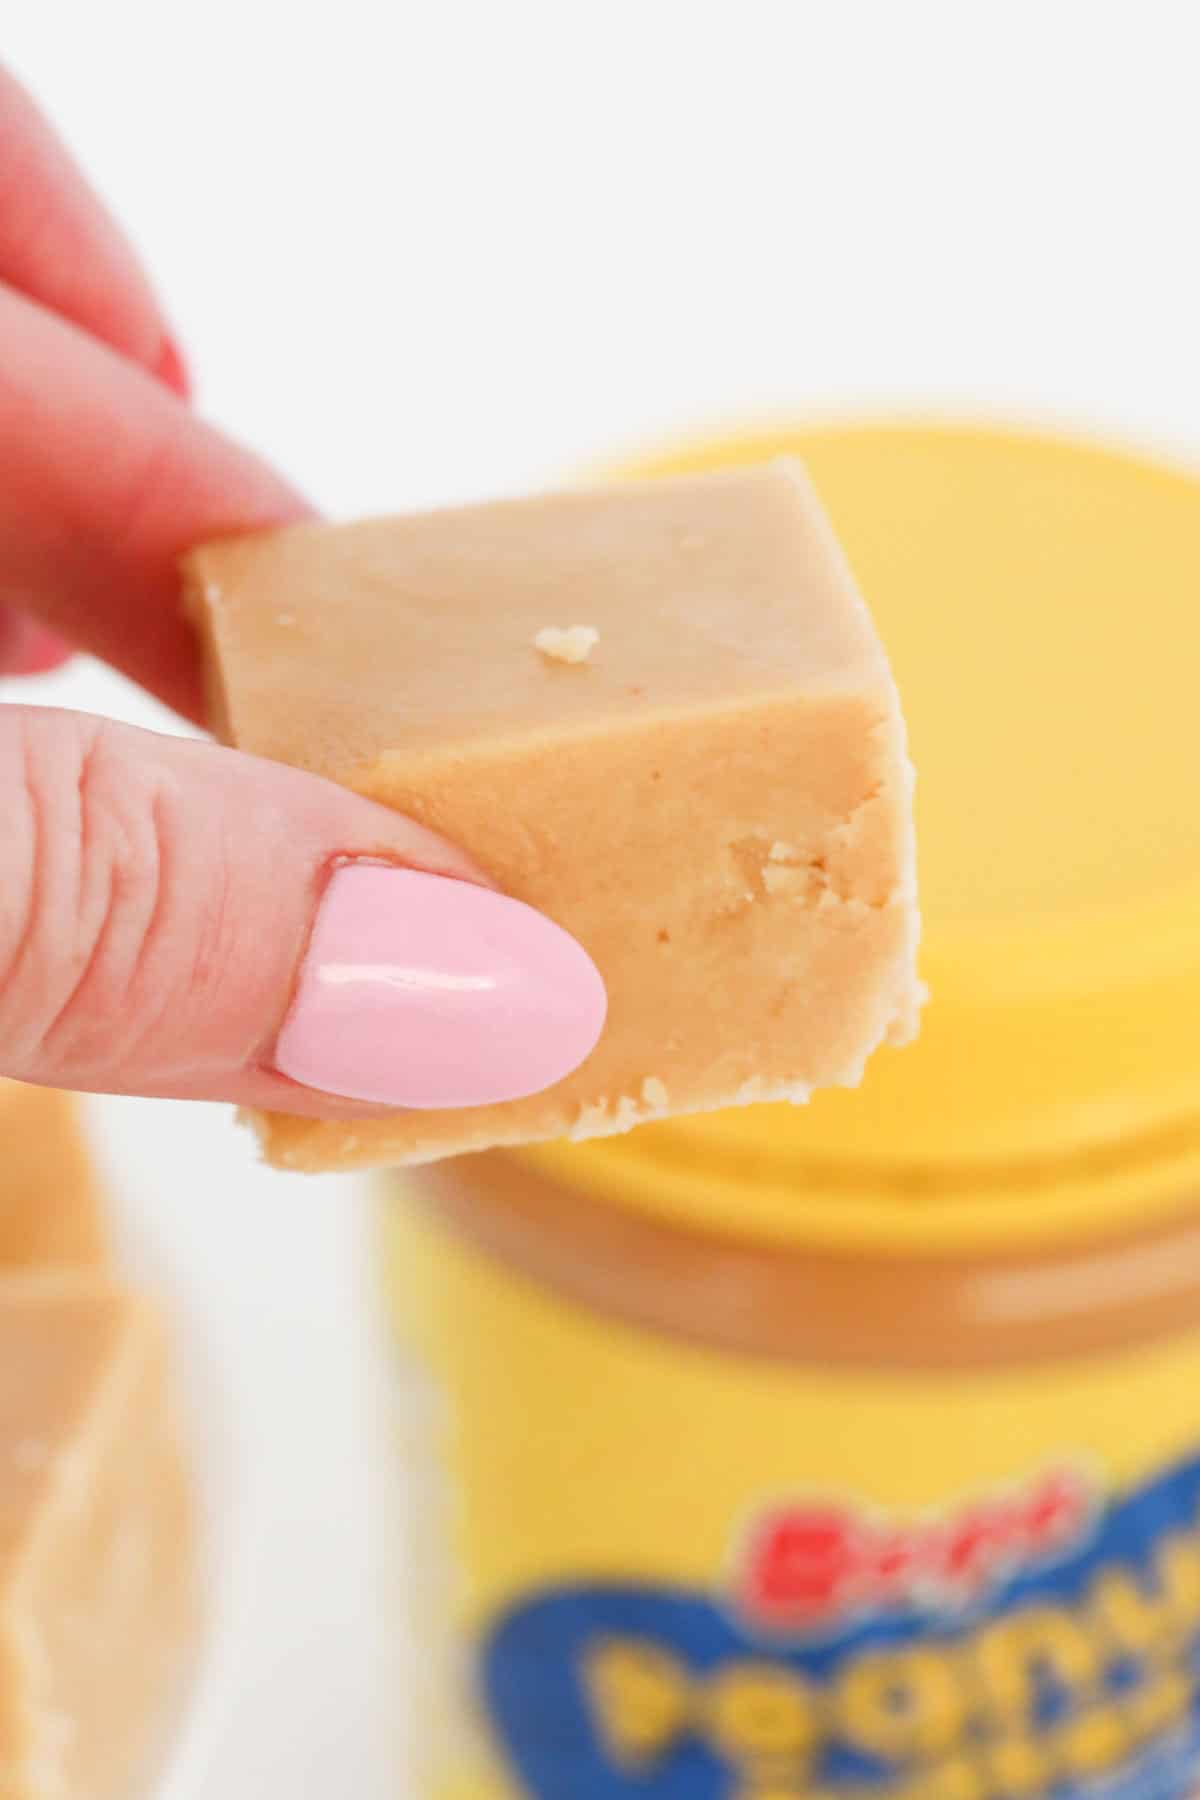 A hand holding a piece of caramel coloured fudge.